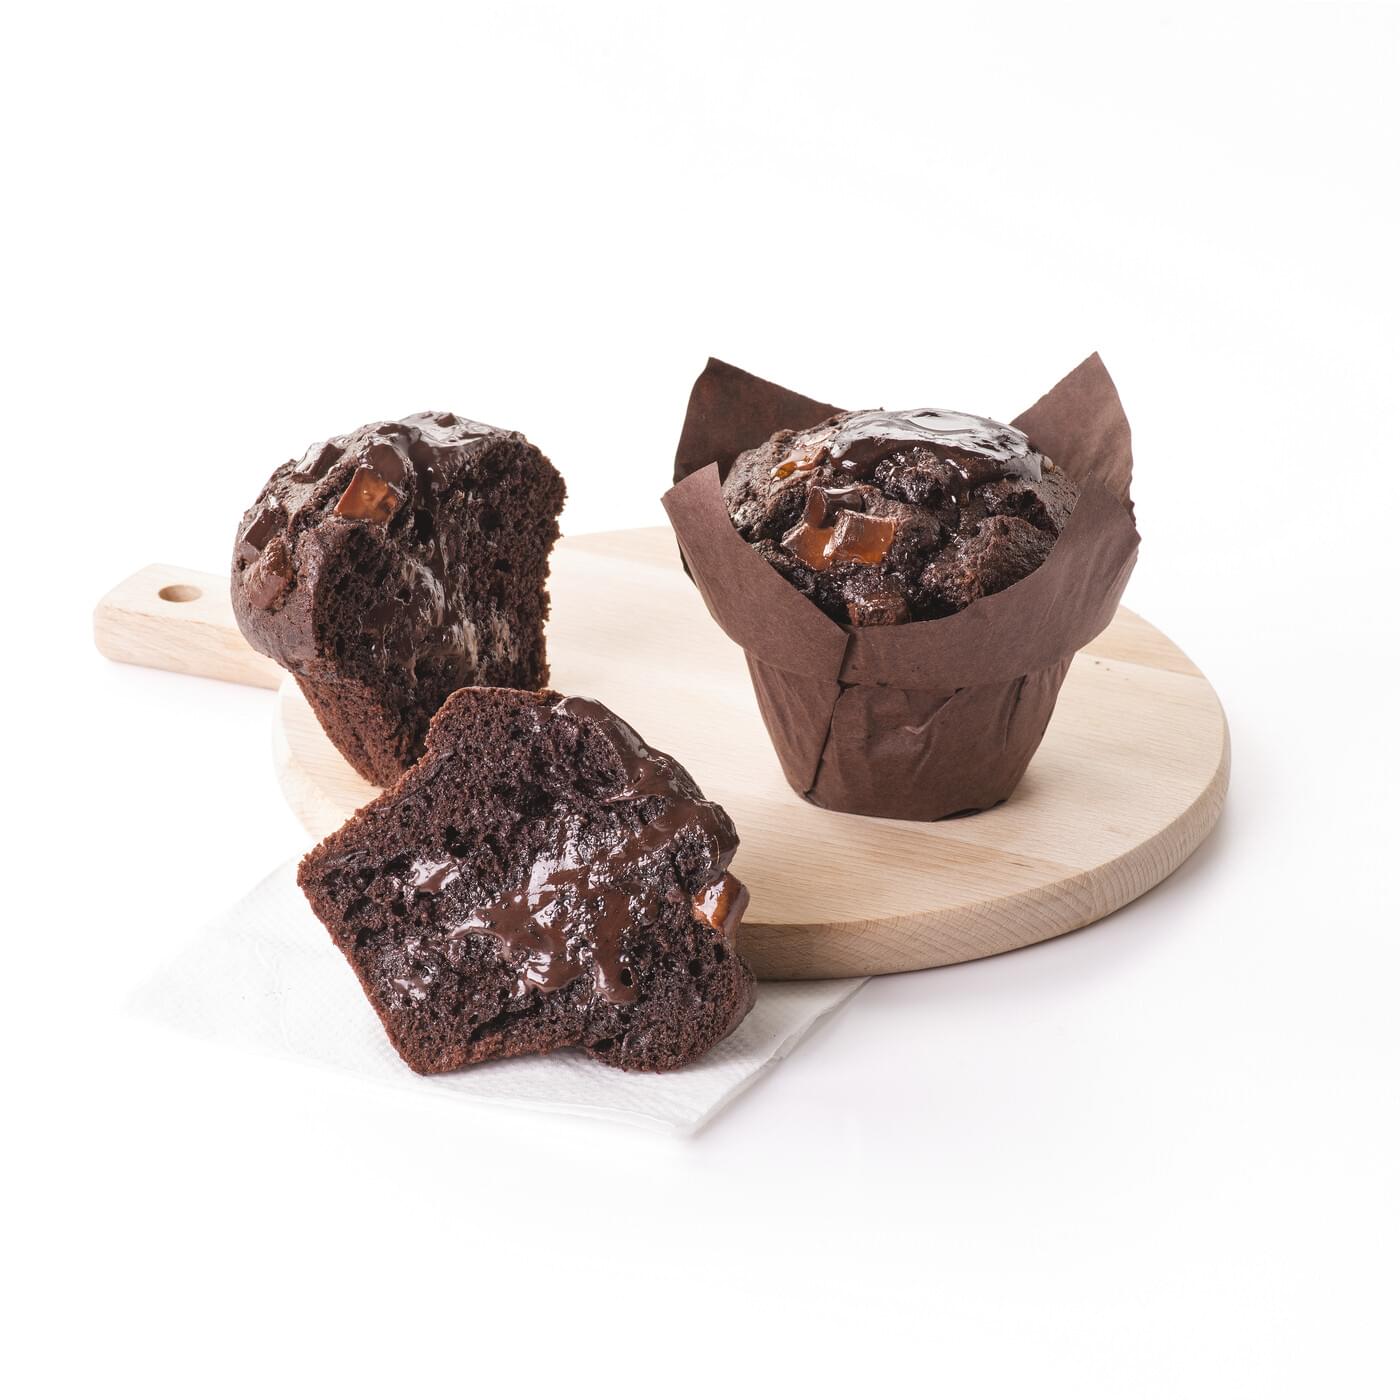 Maxi muffin tulipe chocolat intense | Fiche produit - Coup de pates